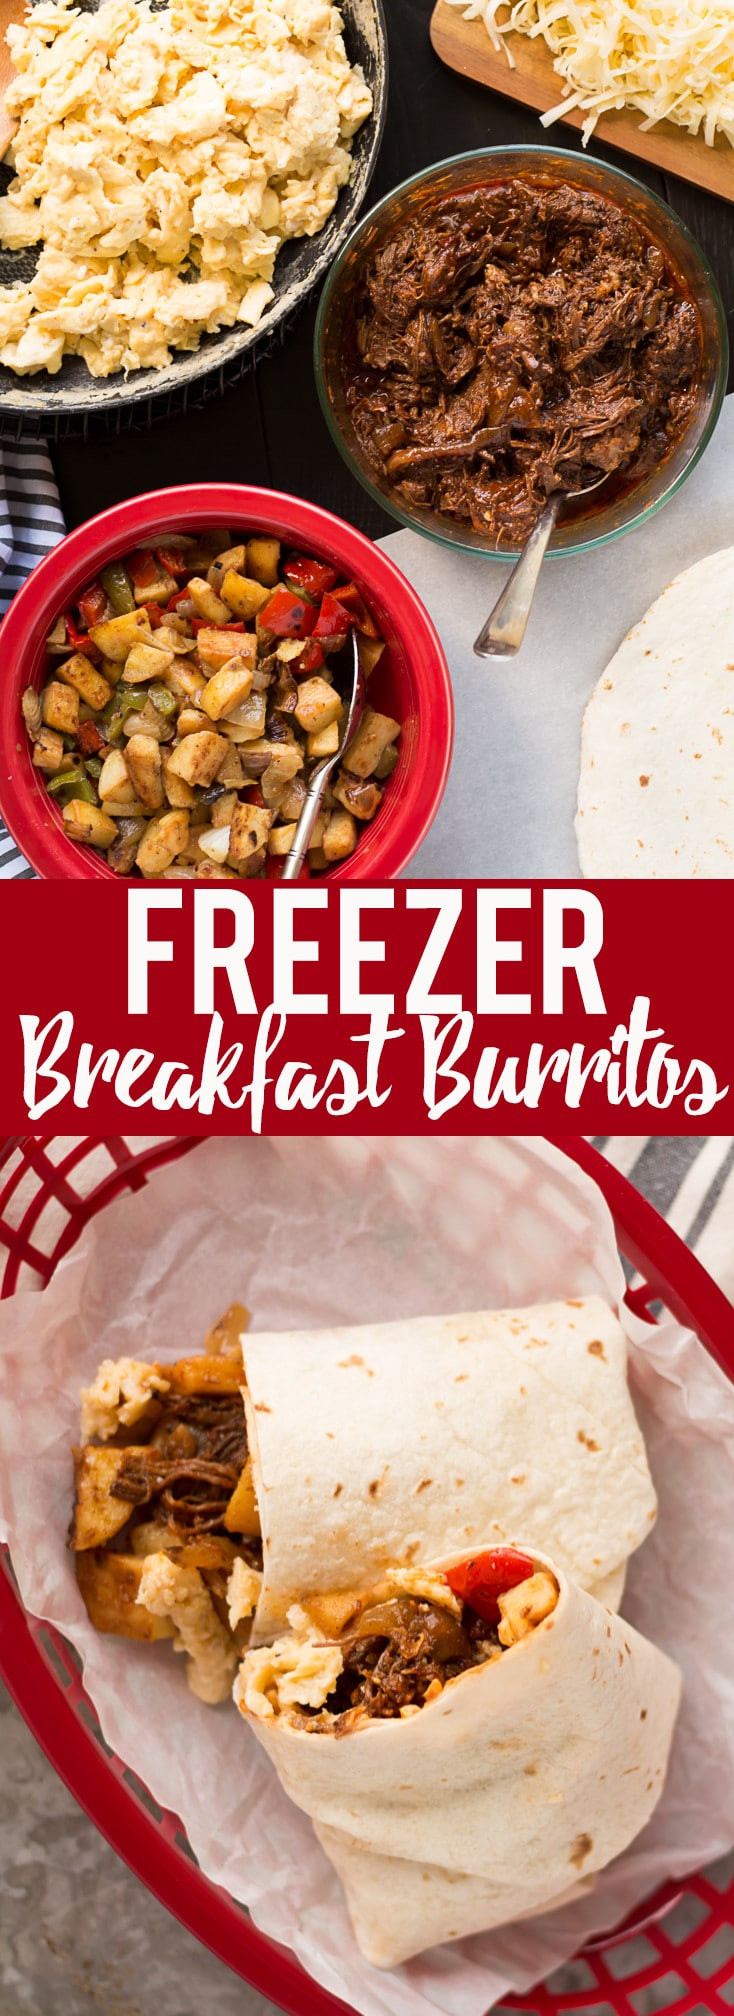 Freezer Breakfast Burritos With Potatoes
 Make Ahead Beef Breakfast Burritos Freezer Friendly